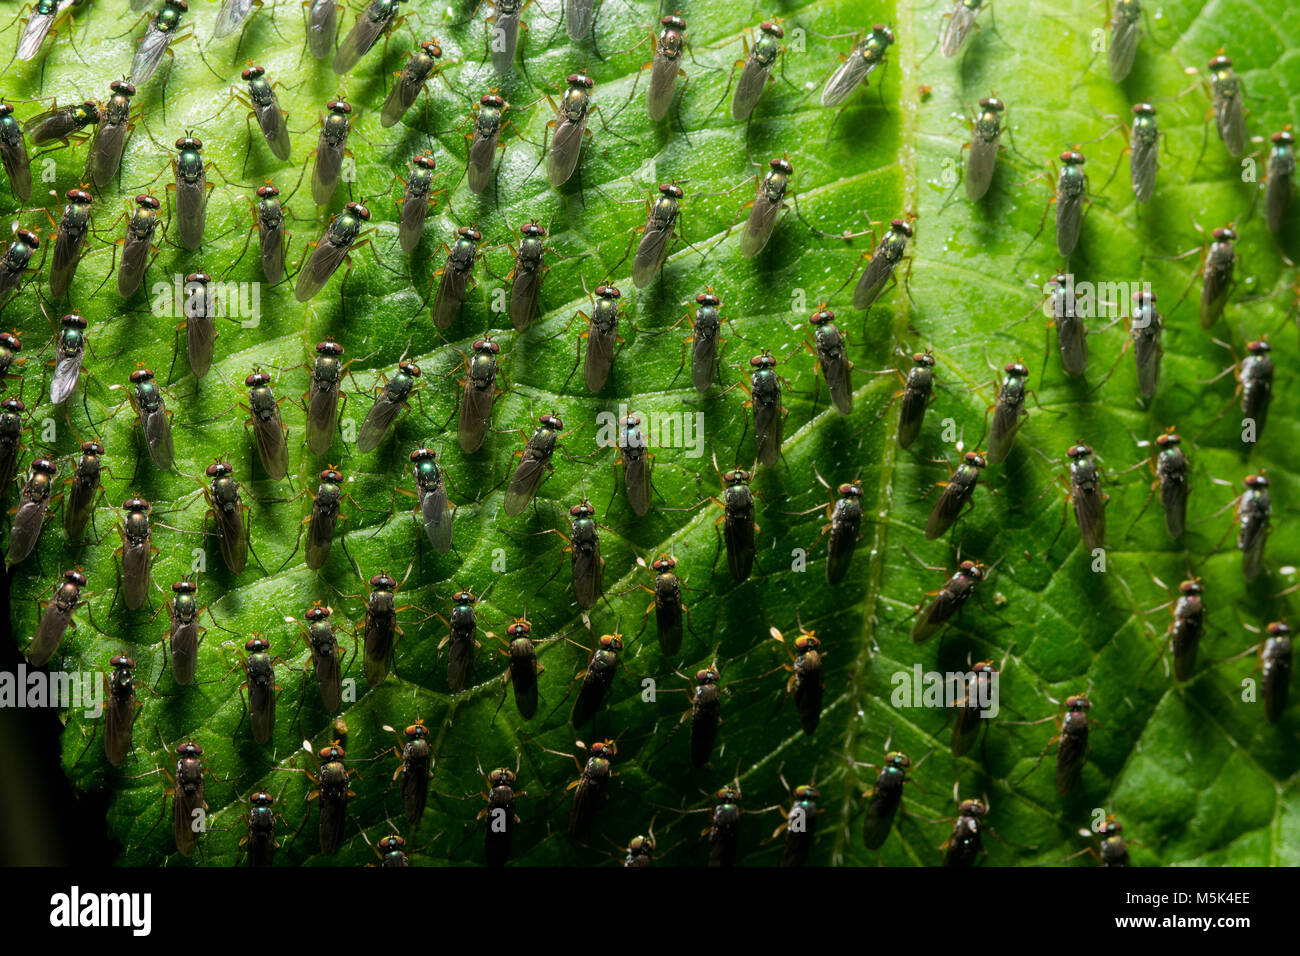 A strangely organized swarm of flies sitting on a leaf. Stock Photo